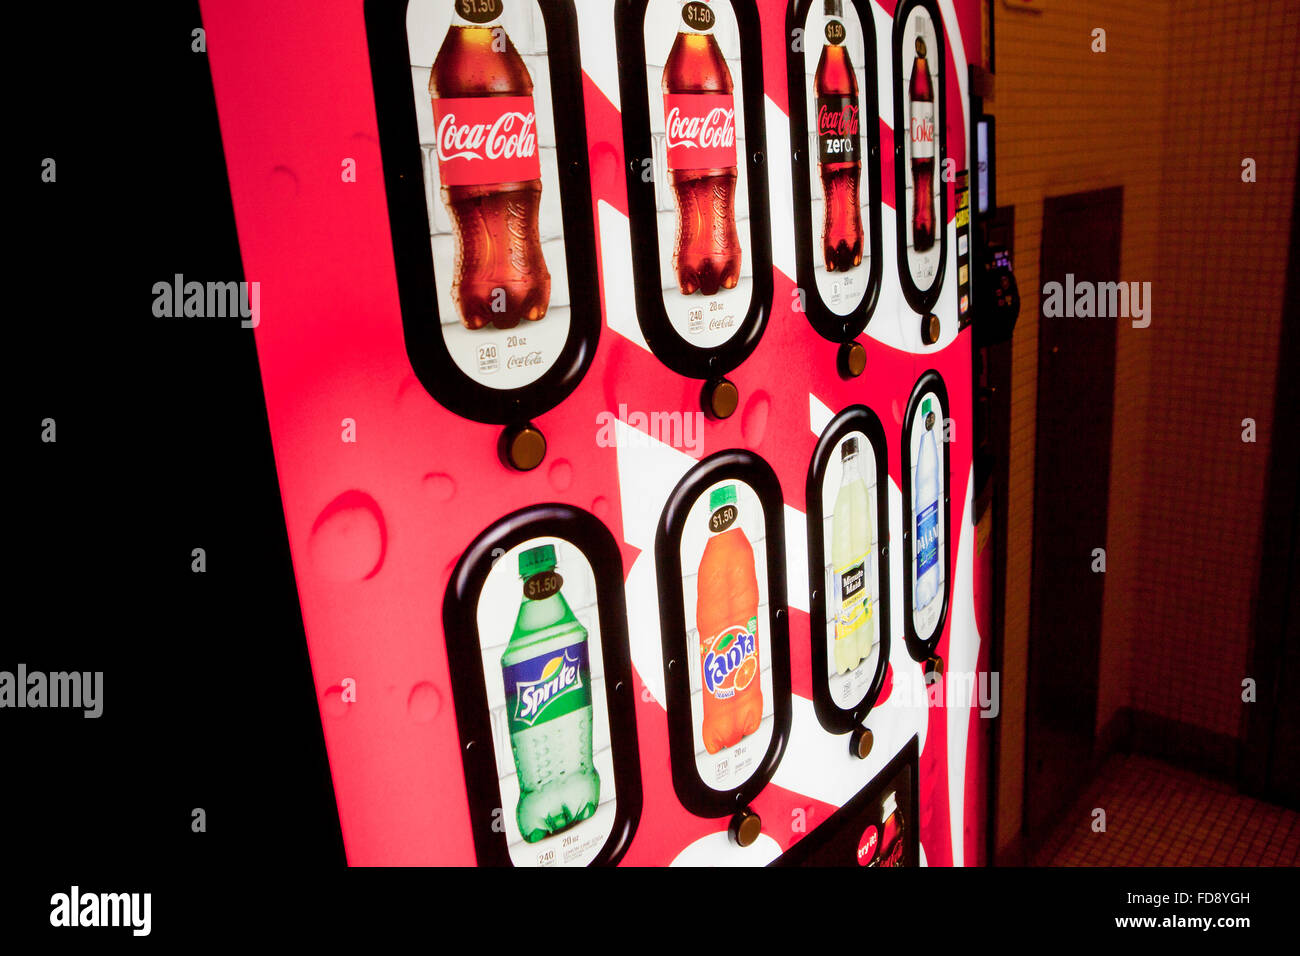 How To Make a Automatic Tea & coffee, Coca-Cola dispenser machine at home